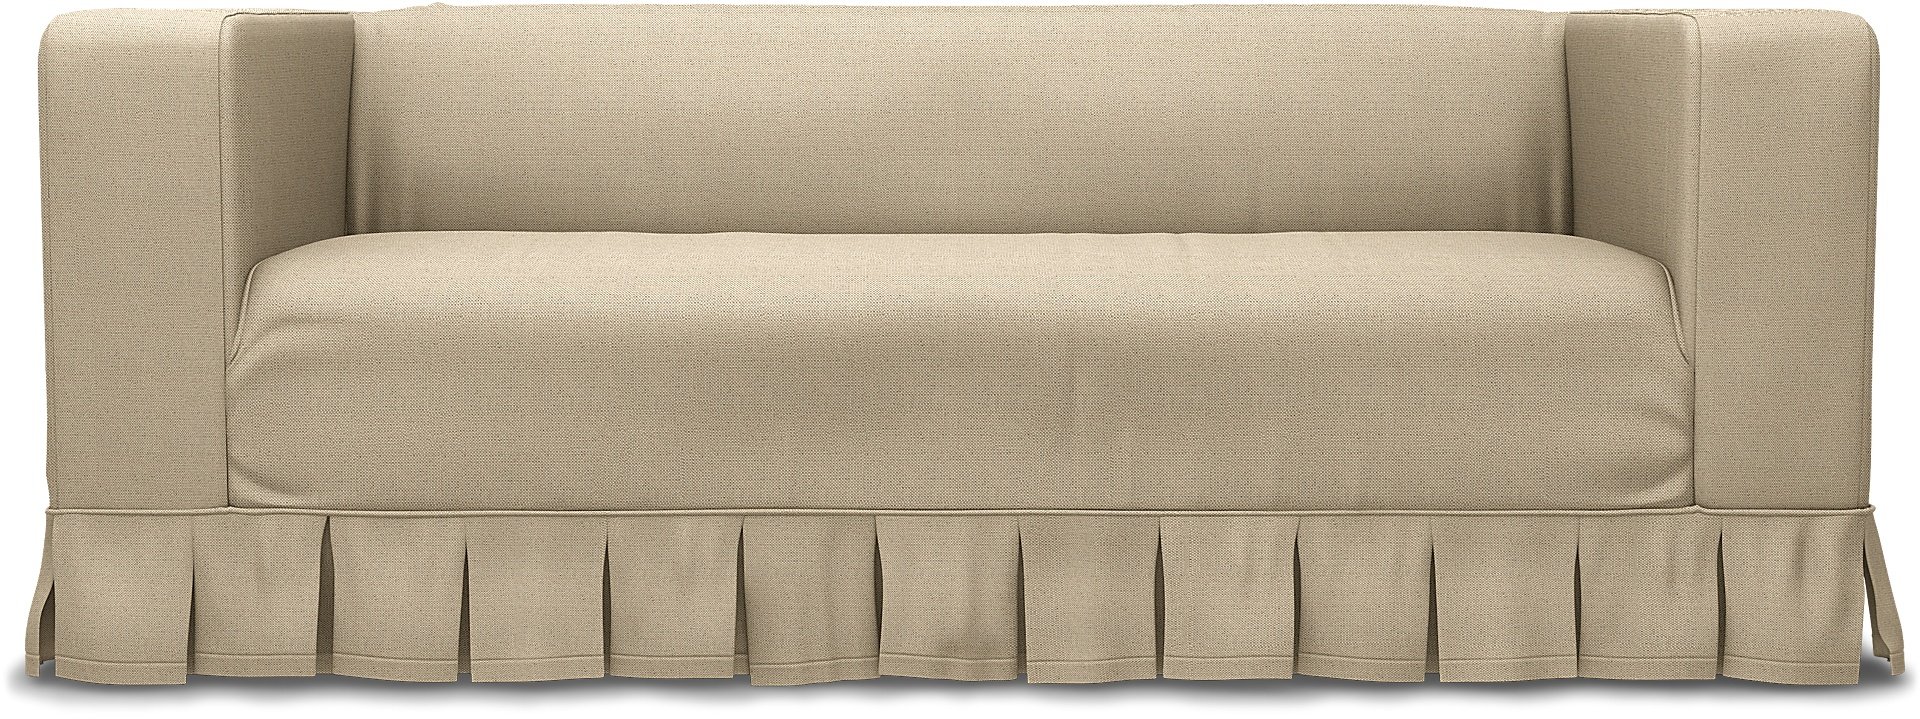 IKEA - Klippan 2 Seater Sofa Cover, Unbleached, Linen - Bemz